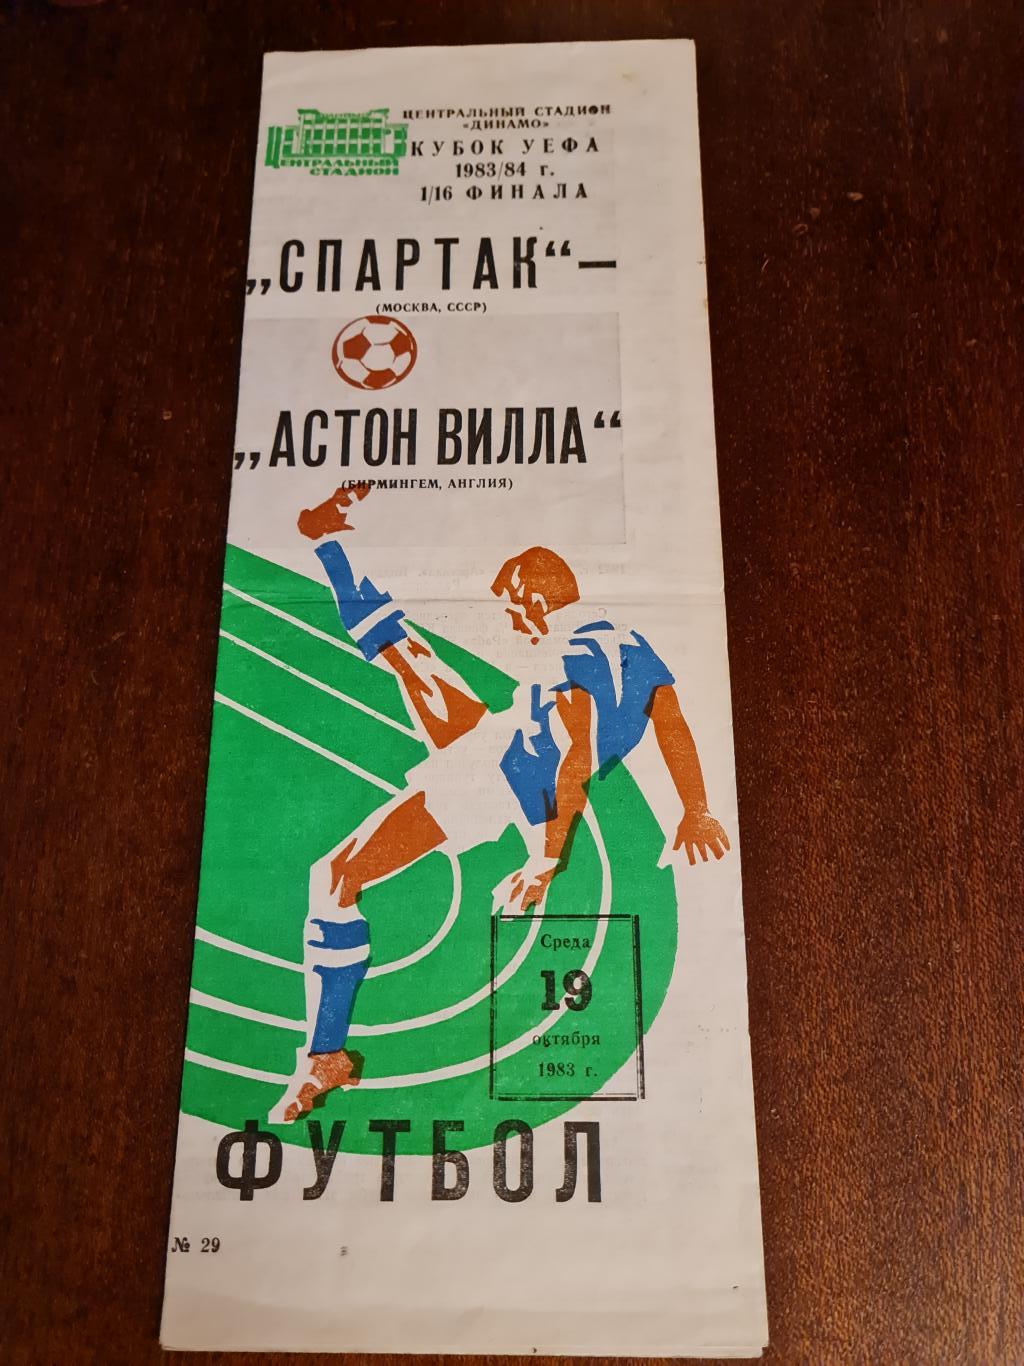 19.10.1983.Спартак- Астон Вилла.